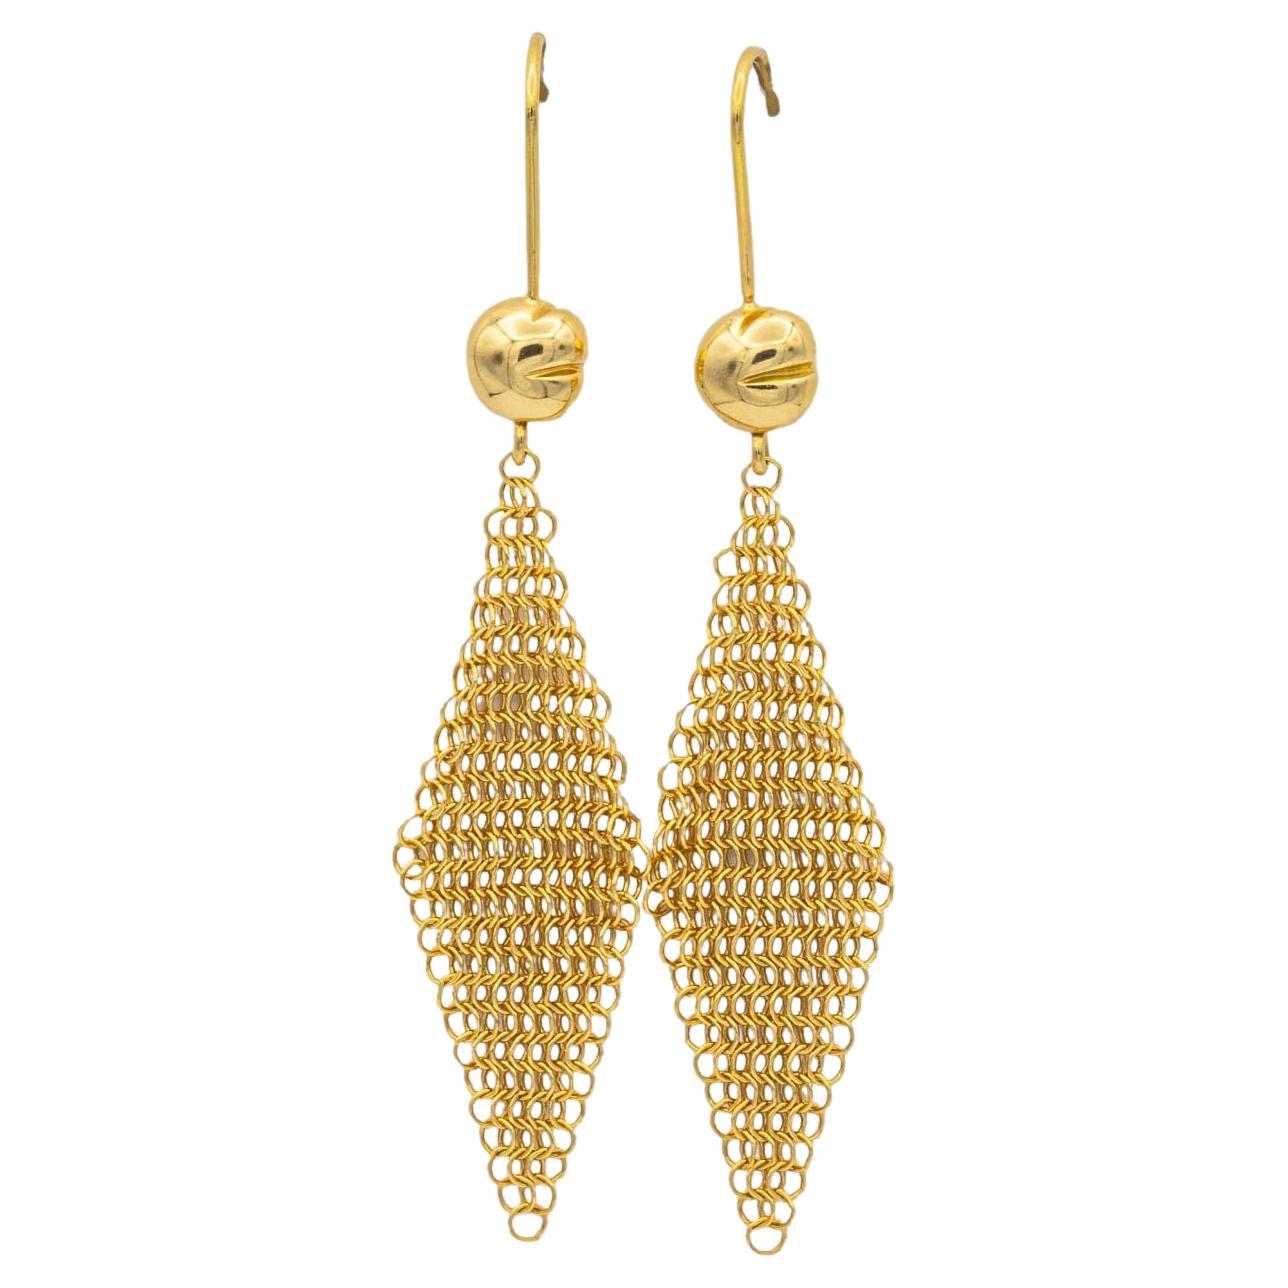 Tiffany & Co. Elsa Peretti Drop Mesh Earrings in 18K Yellow Gold, Circa 1981